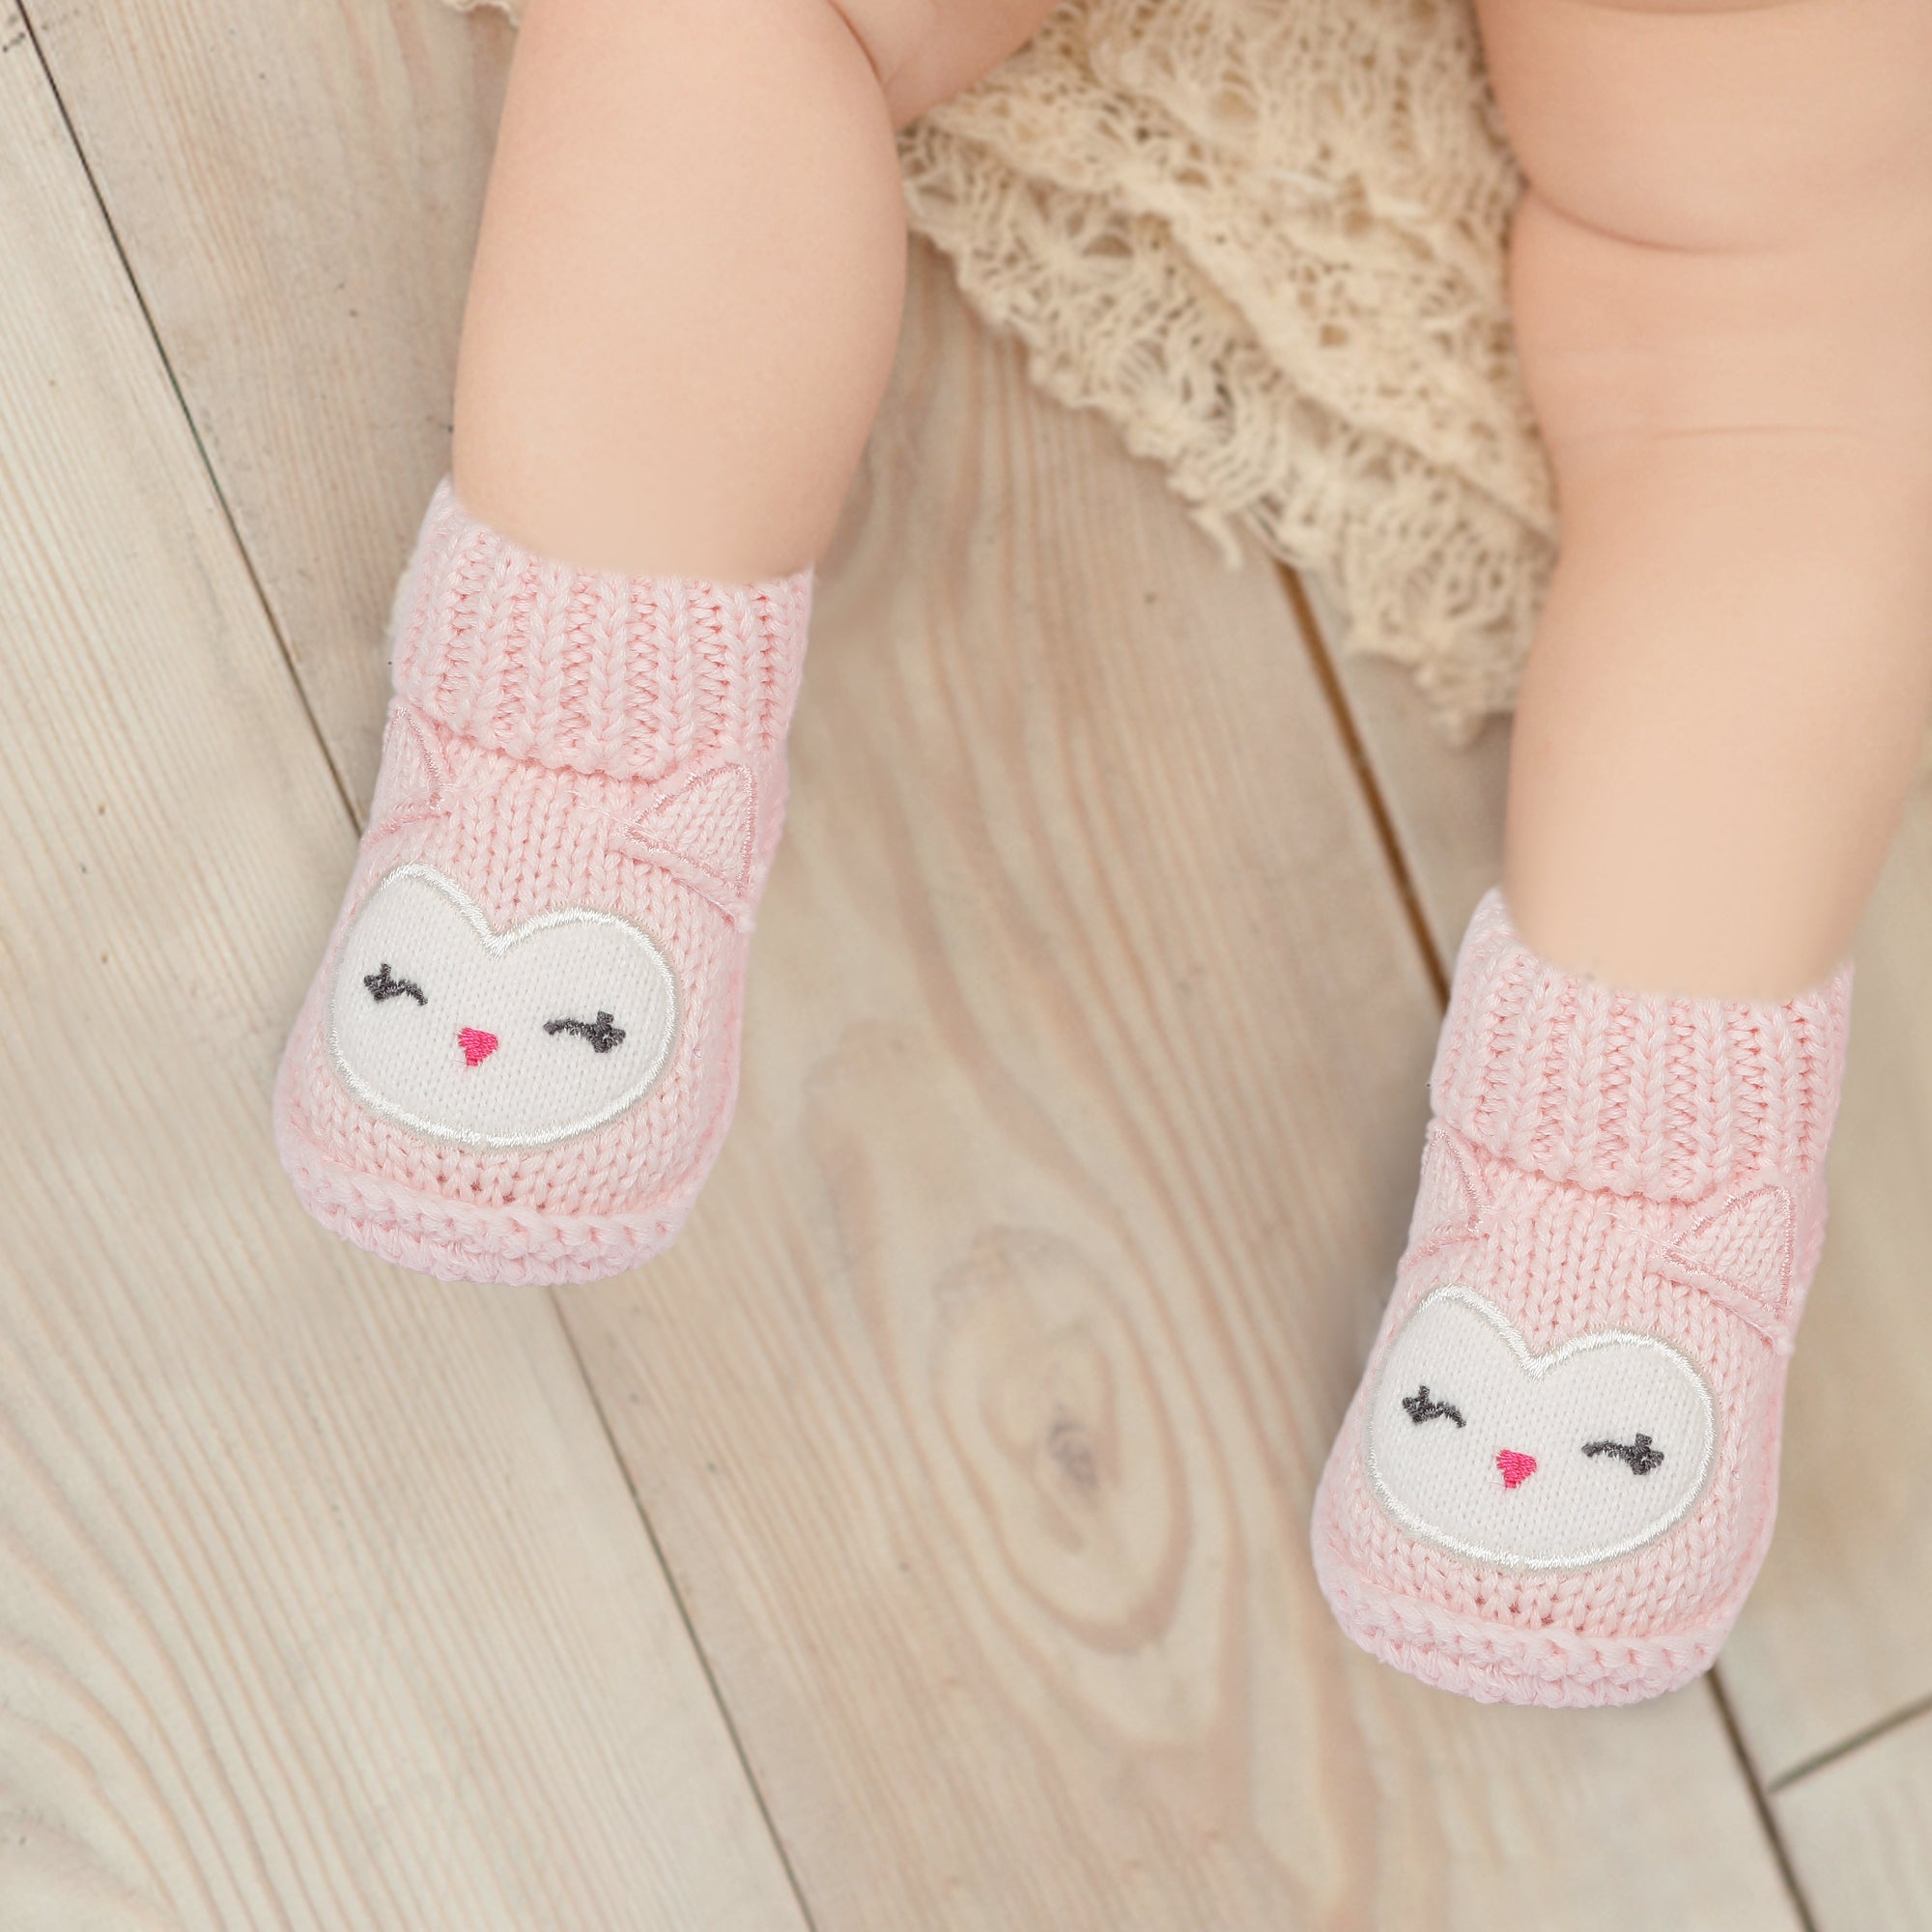 Baby Moo Blushing Newborn Crochet Socks Booties - Pink